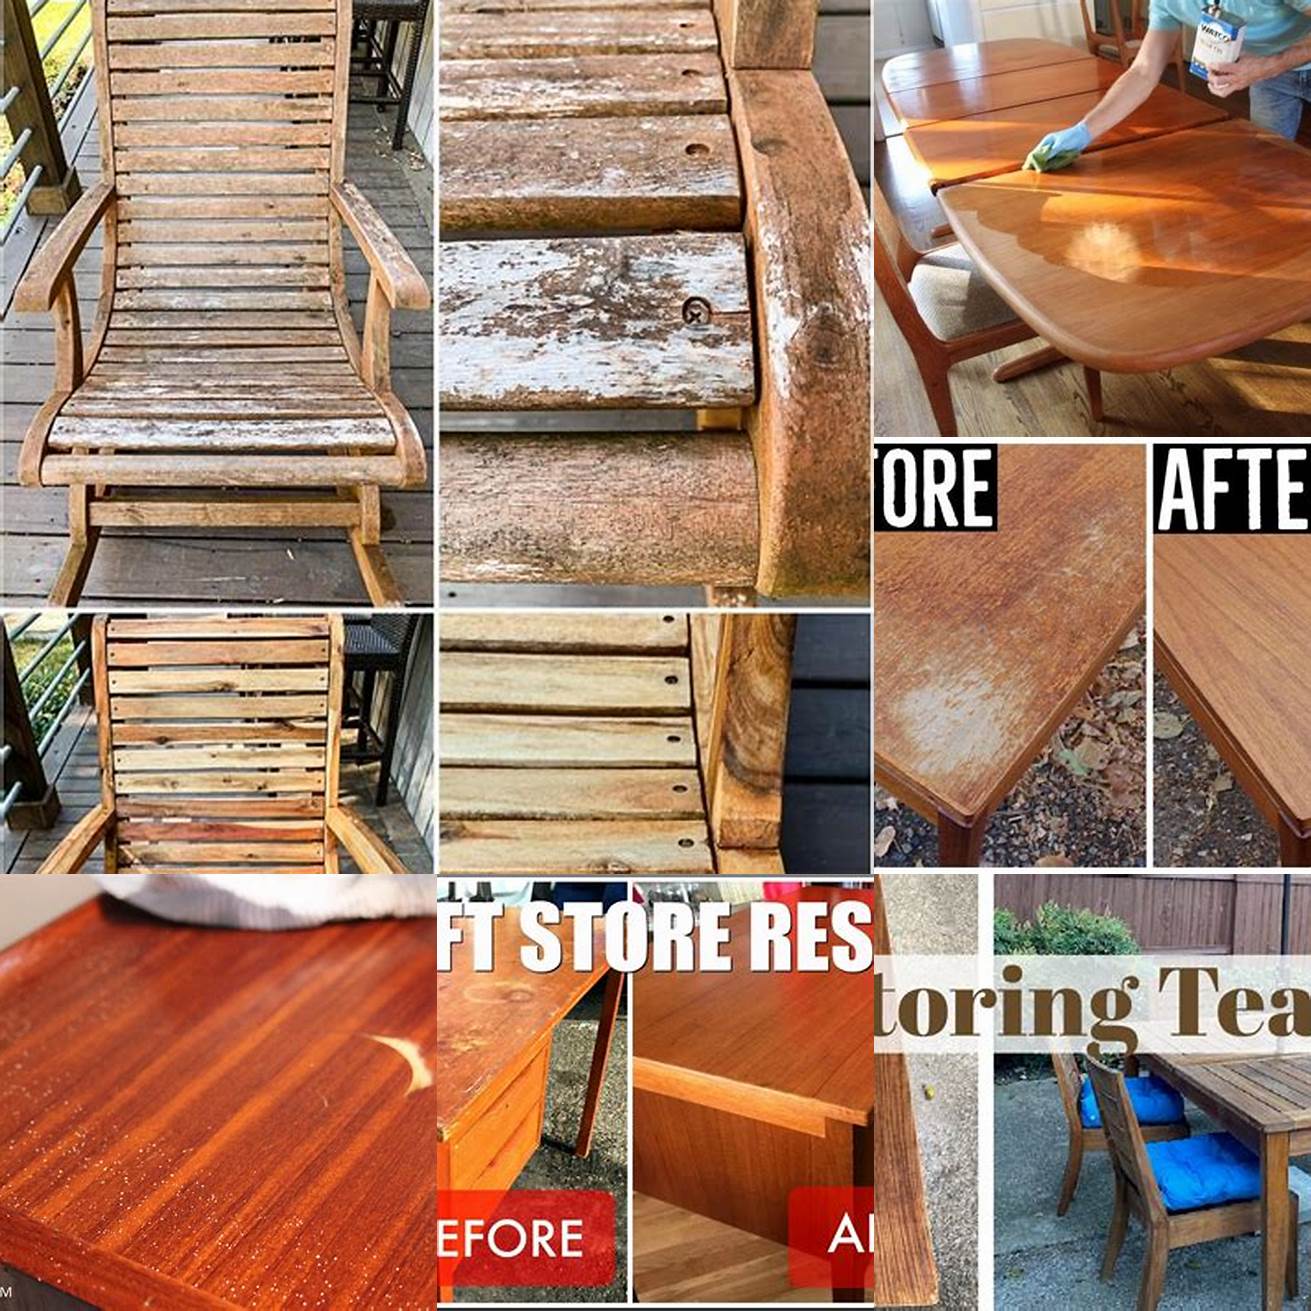 Refinishing the Teak Furniture